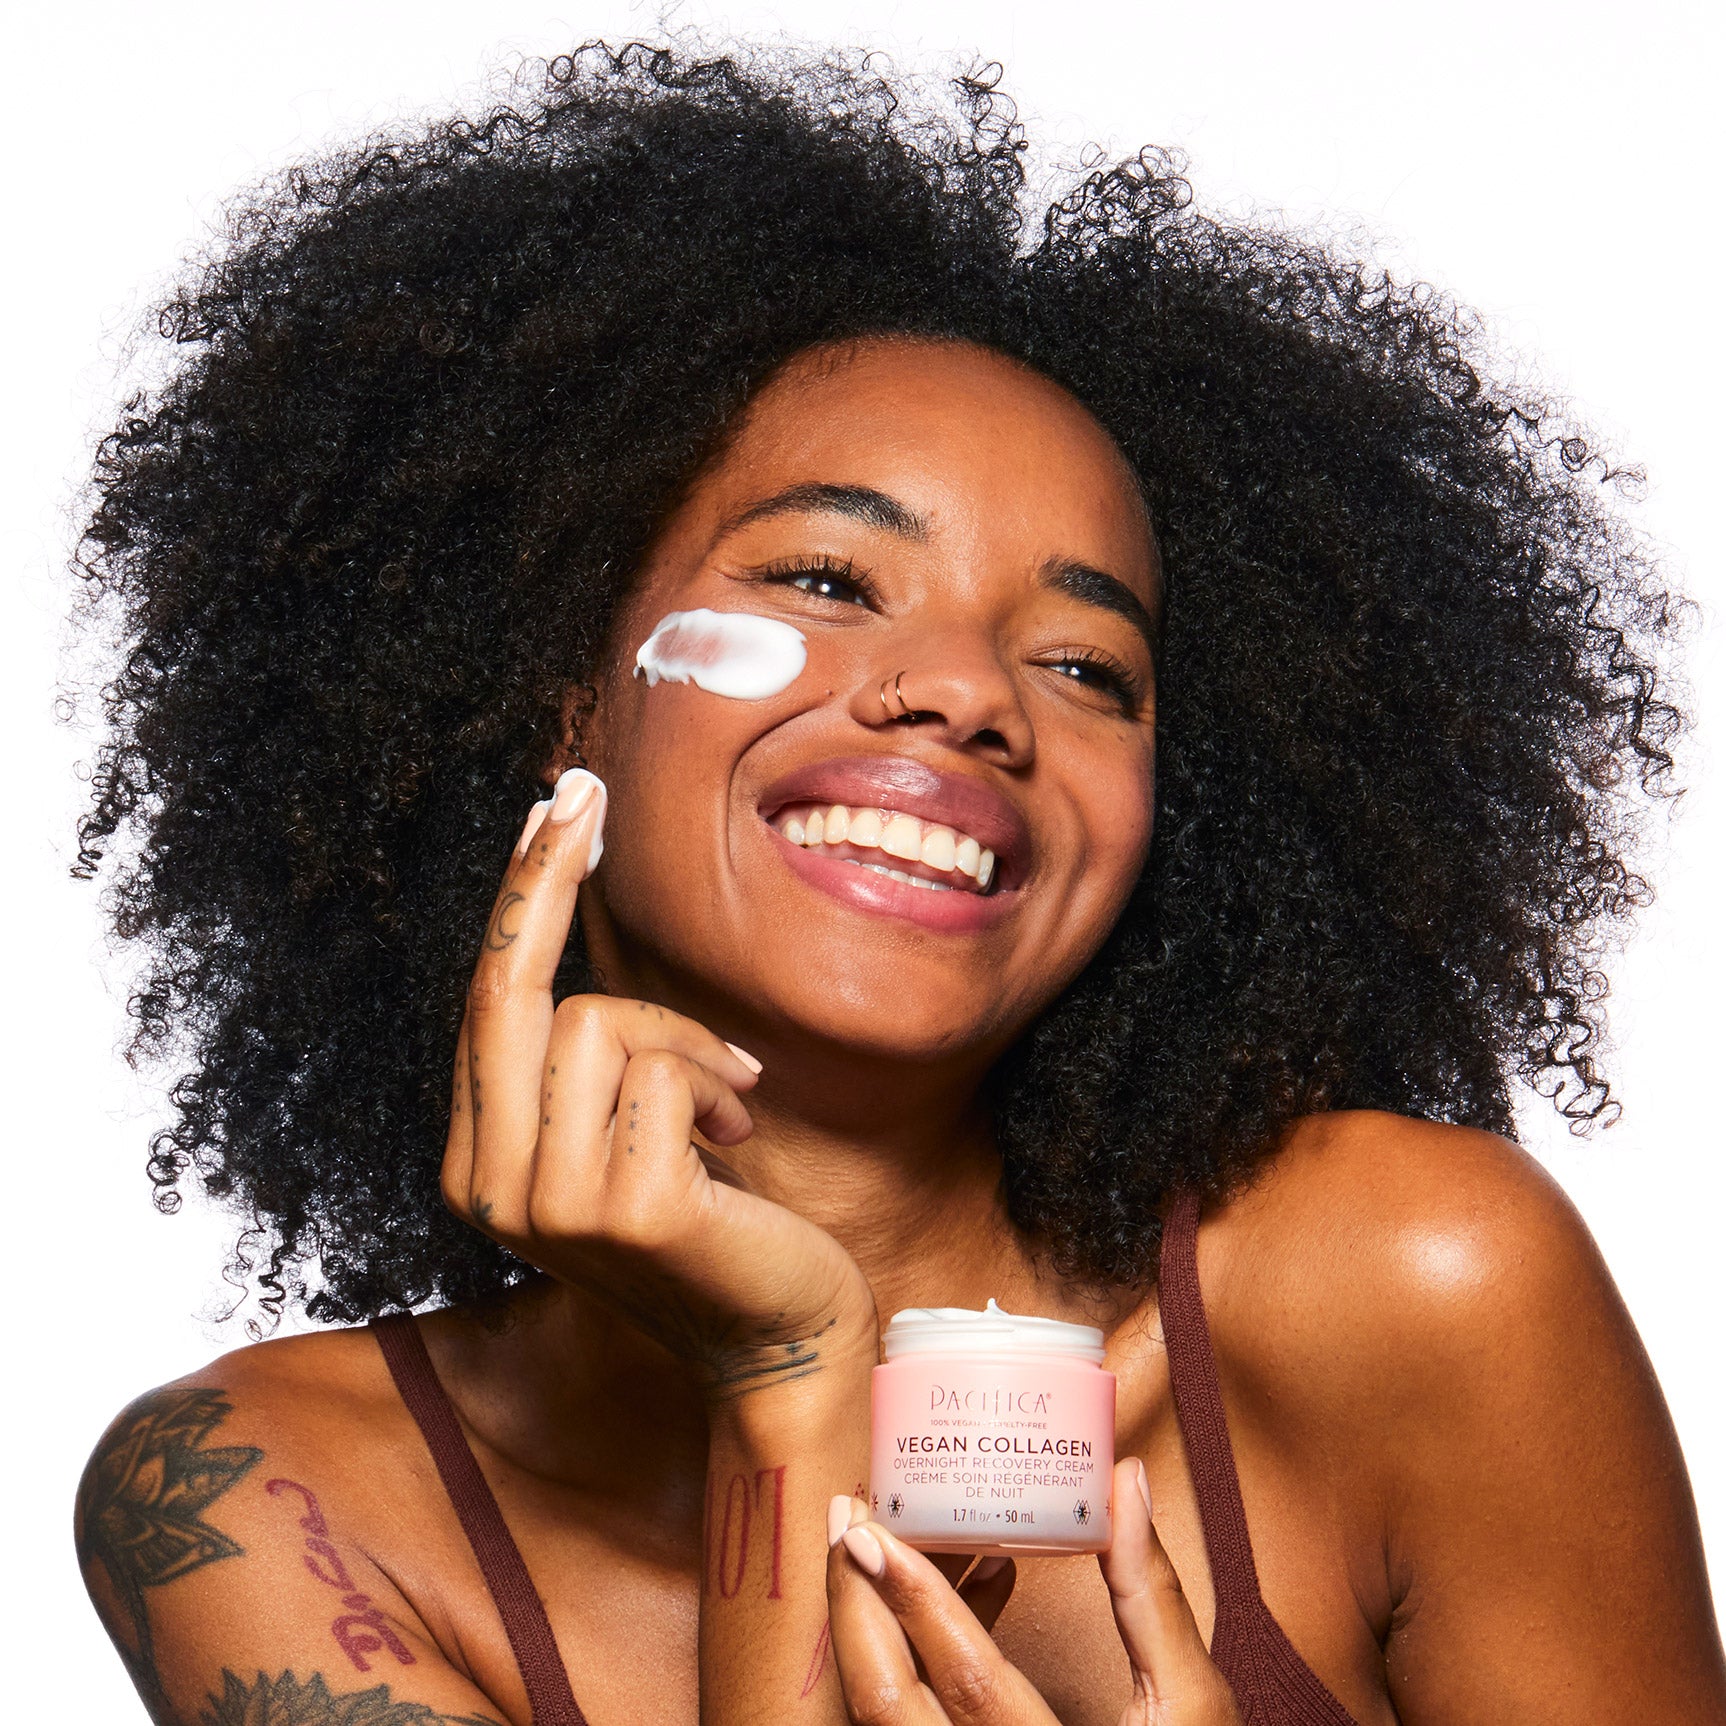 Vegan Collagen Overnight Recovery Cream - Skin Care - Pacifica Beauty